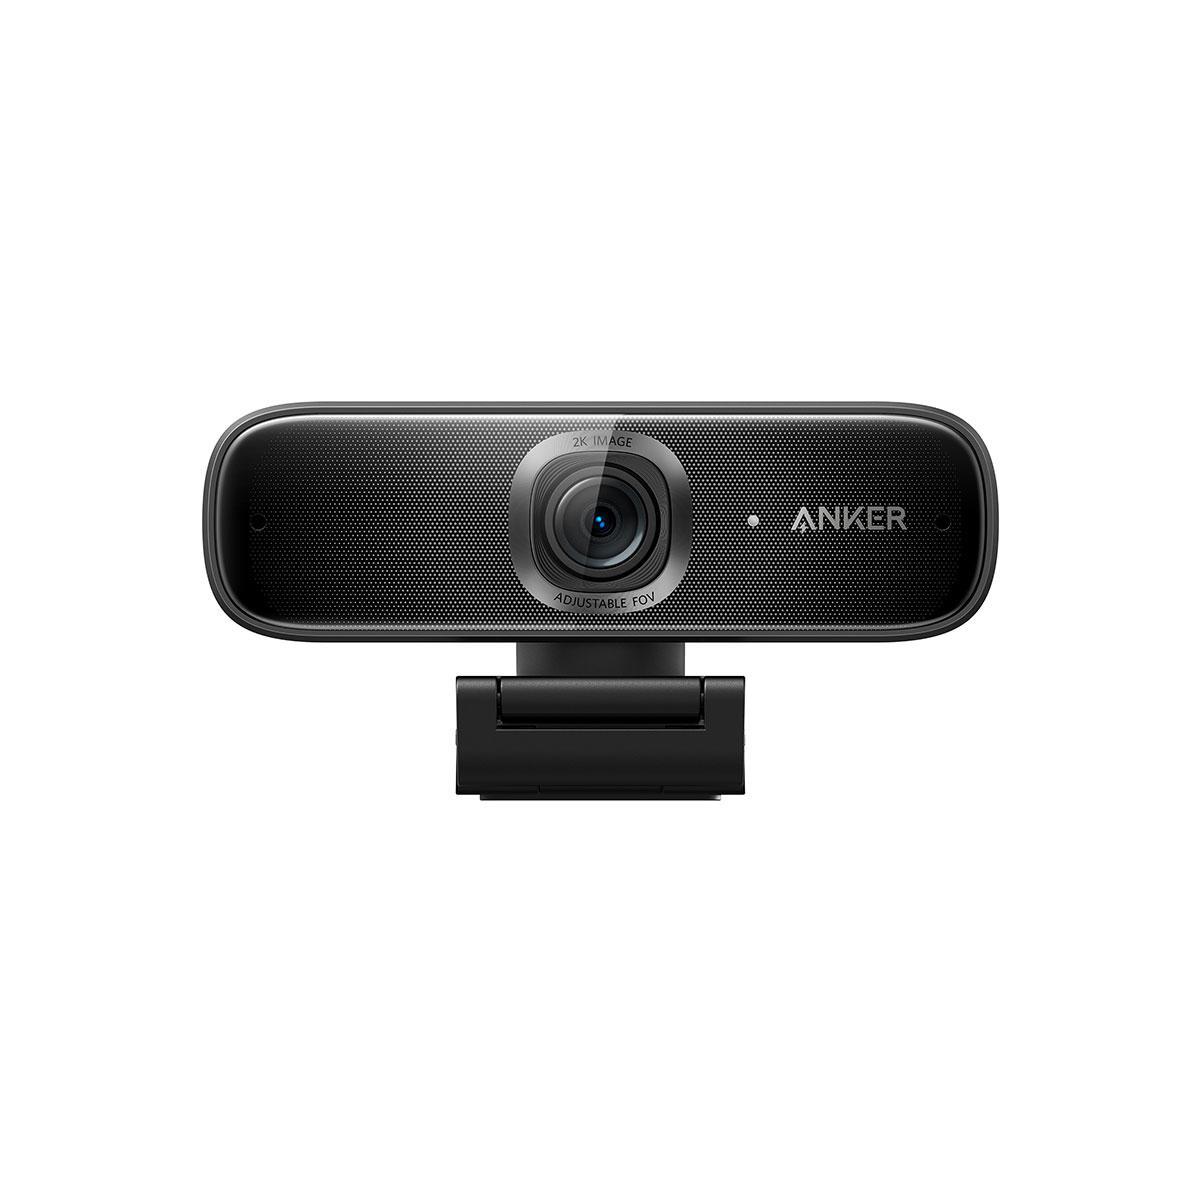 Anker Powerconf C302 Webcam